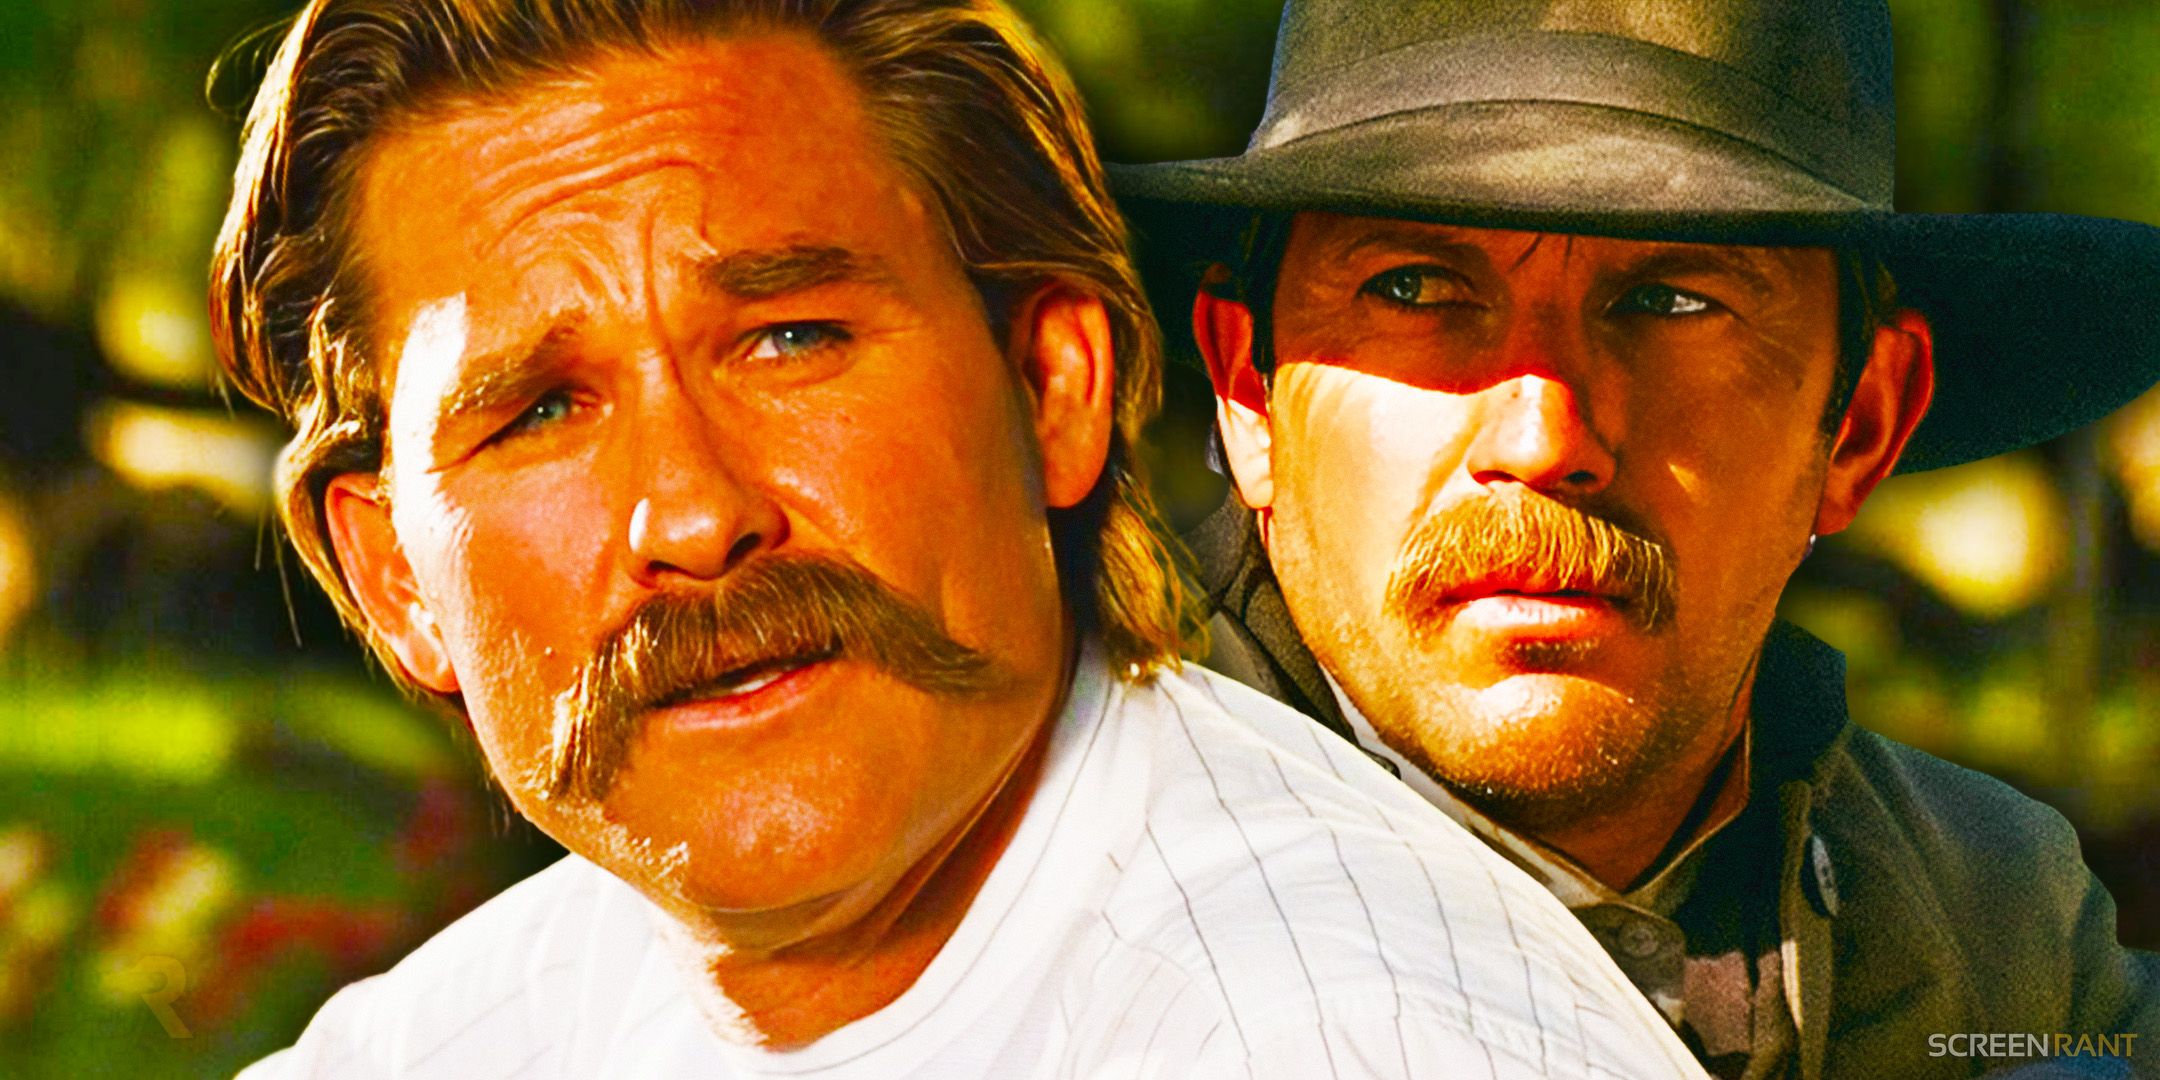 Kurt Russell's Wyatt Earp from Tombstone looks at Kevin Costner's intense Wyatt Earp in 1994's Wyatt Earp movie